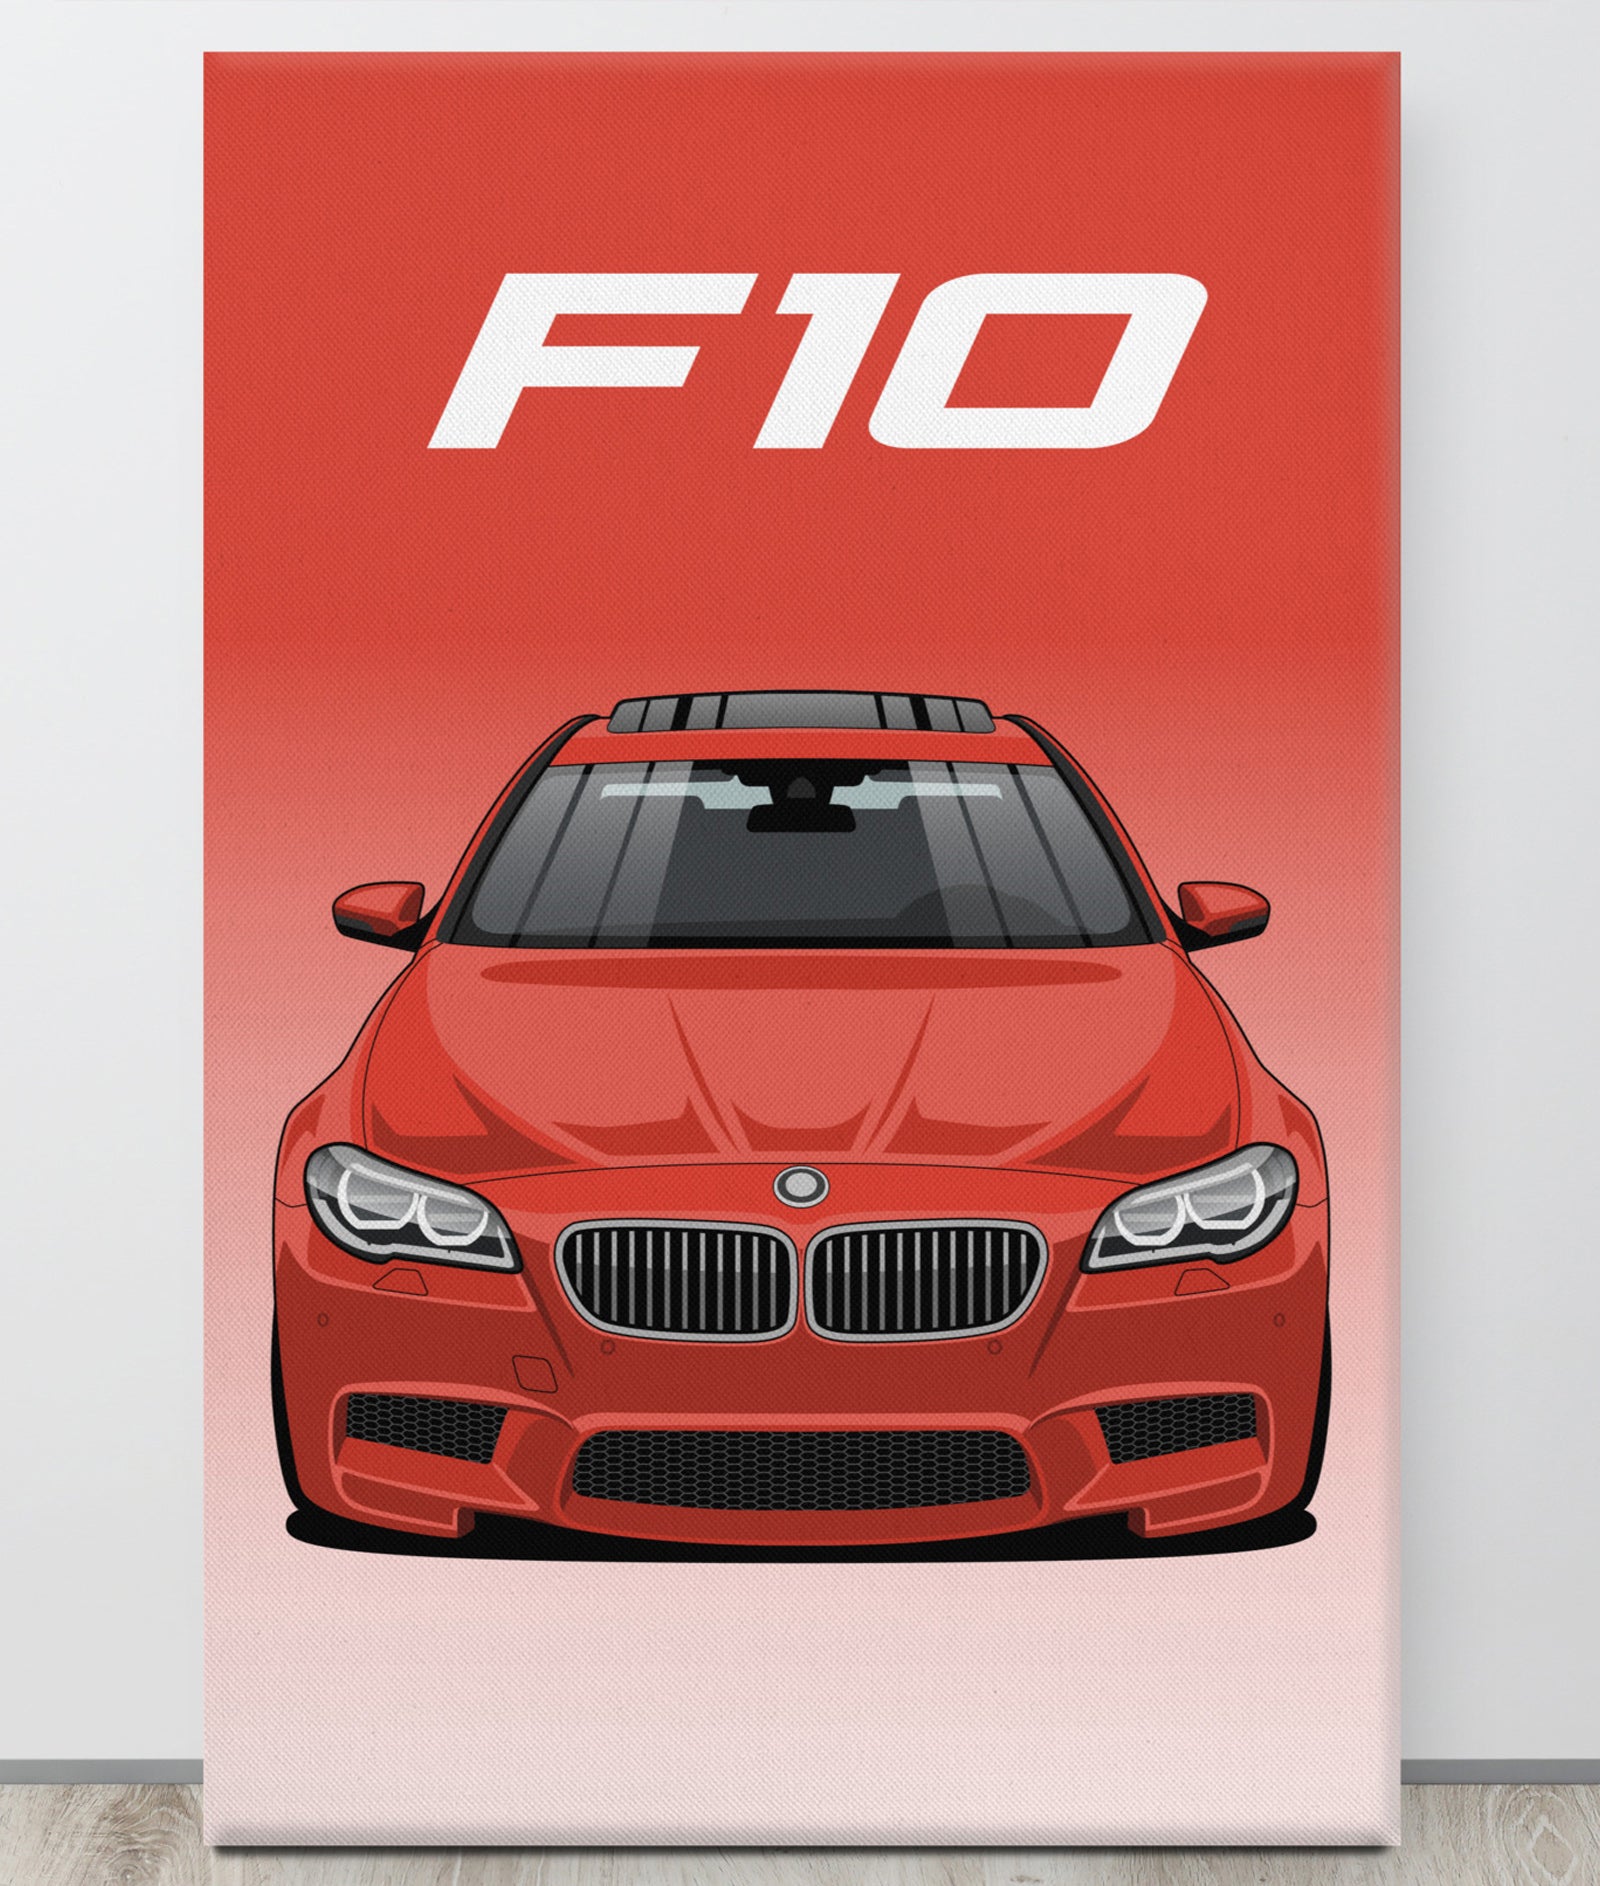 BMW F10 M5 Printed On Wall Art Canvas - AutomotiveCanva